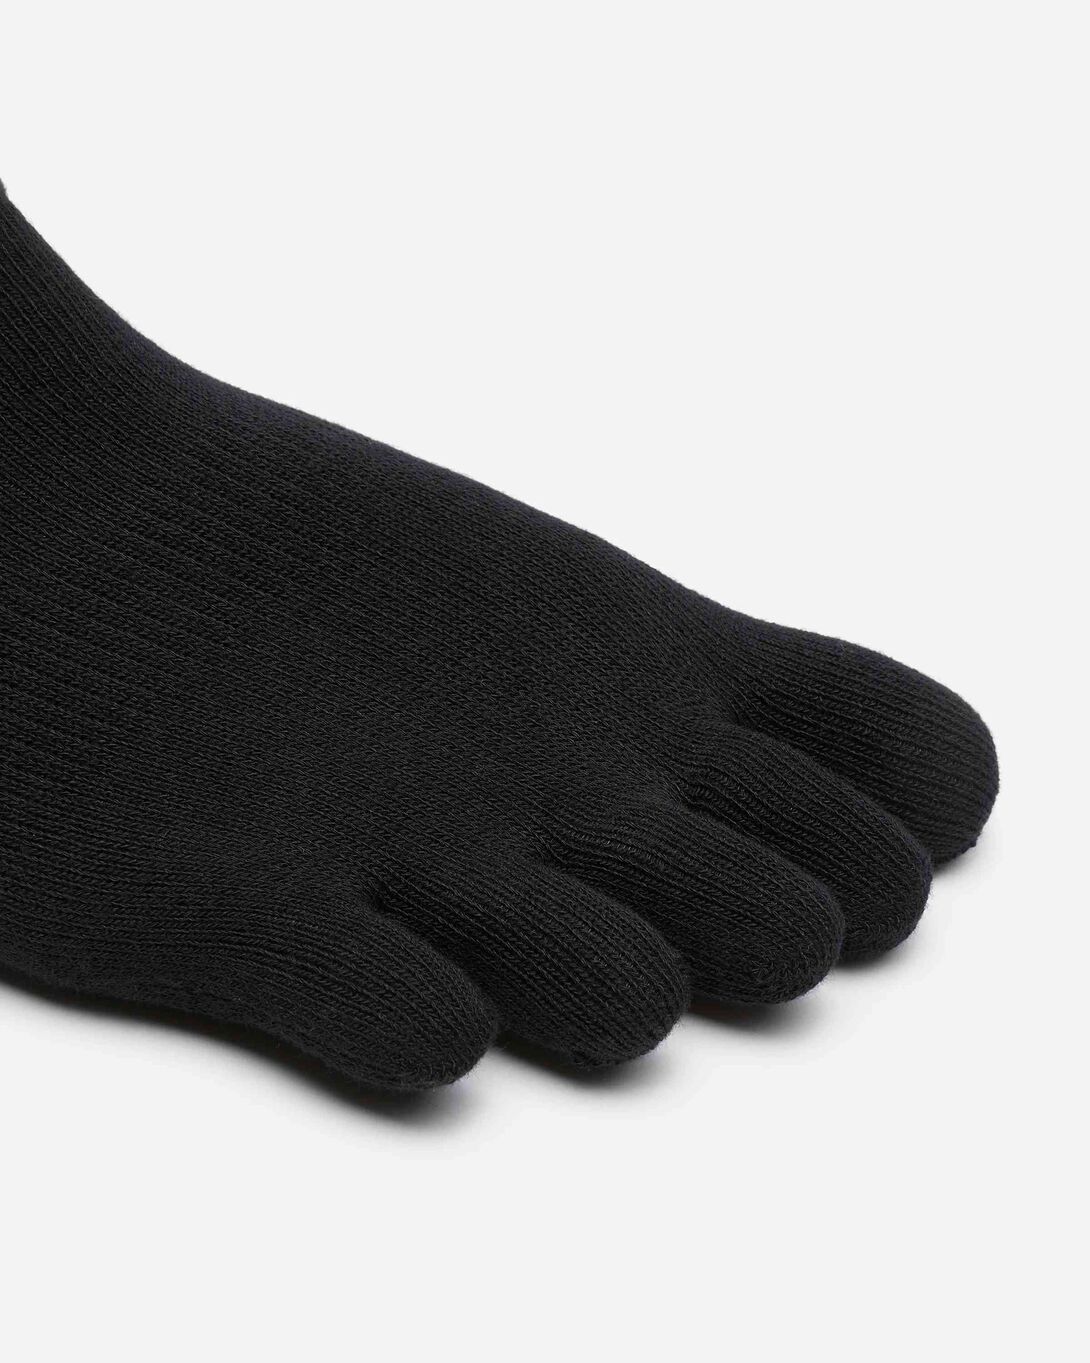 Vibram 5TOE Sock No Show 2 Pack Dark Grey/Red Black – Health Essentials